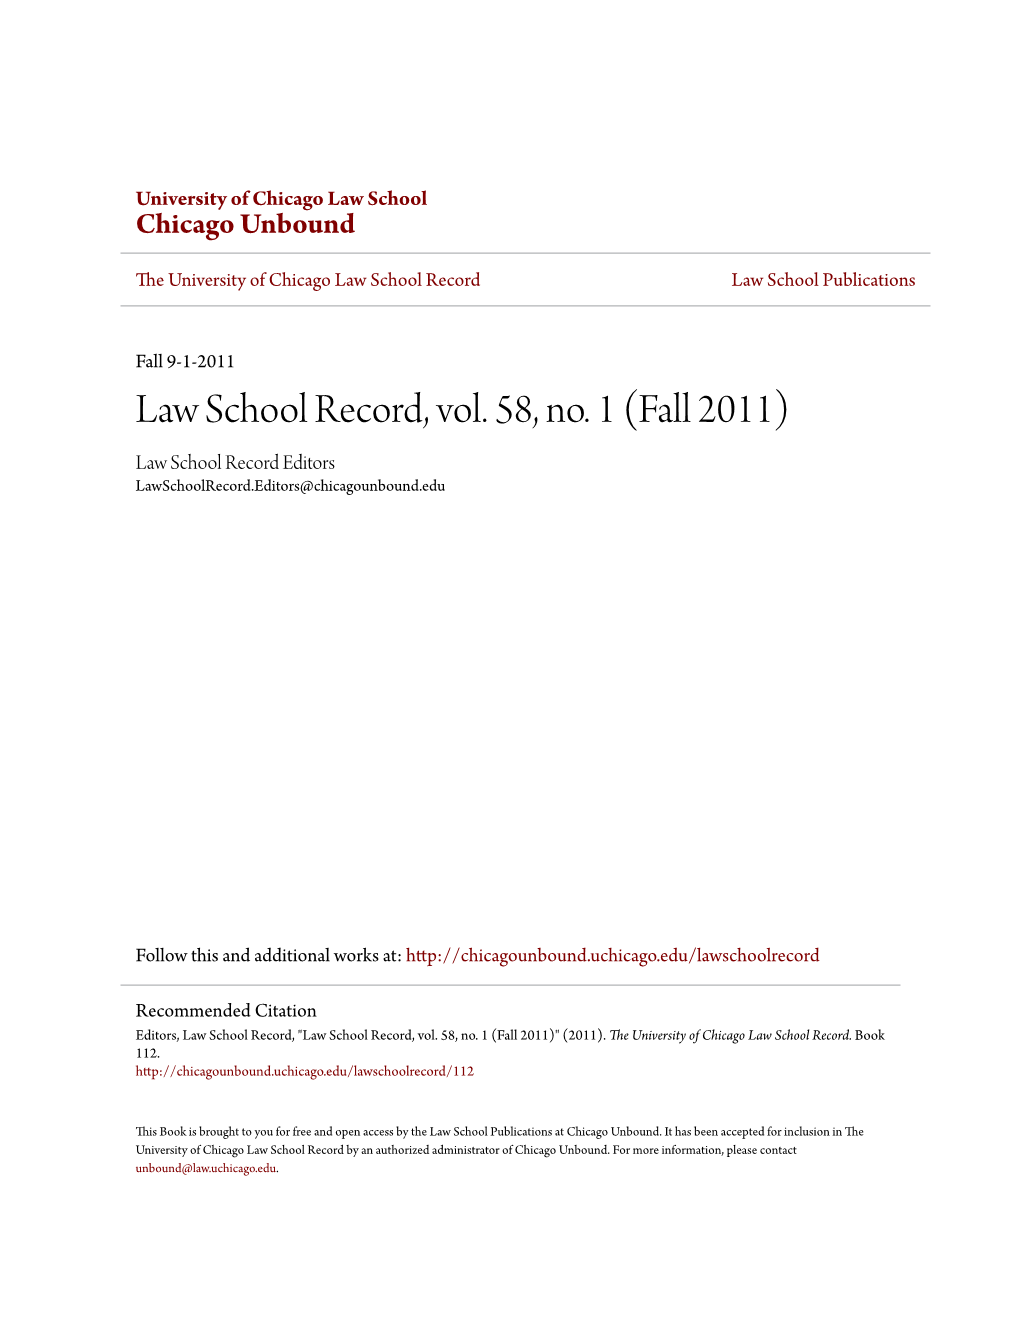 Law School Record, Vol. 58, No. 1 (Fall 2011) Law School Record Editors Lawschoolrecord.Editors@Chicagounbound.Edu